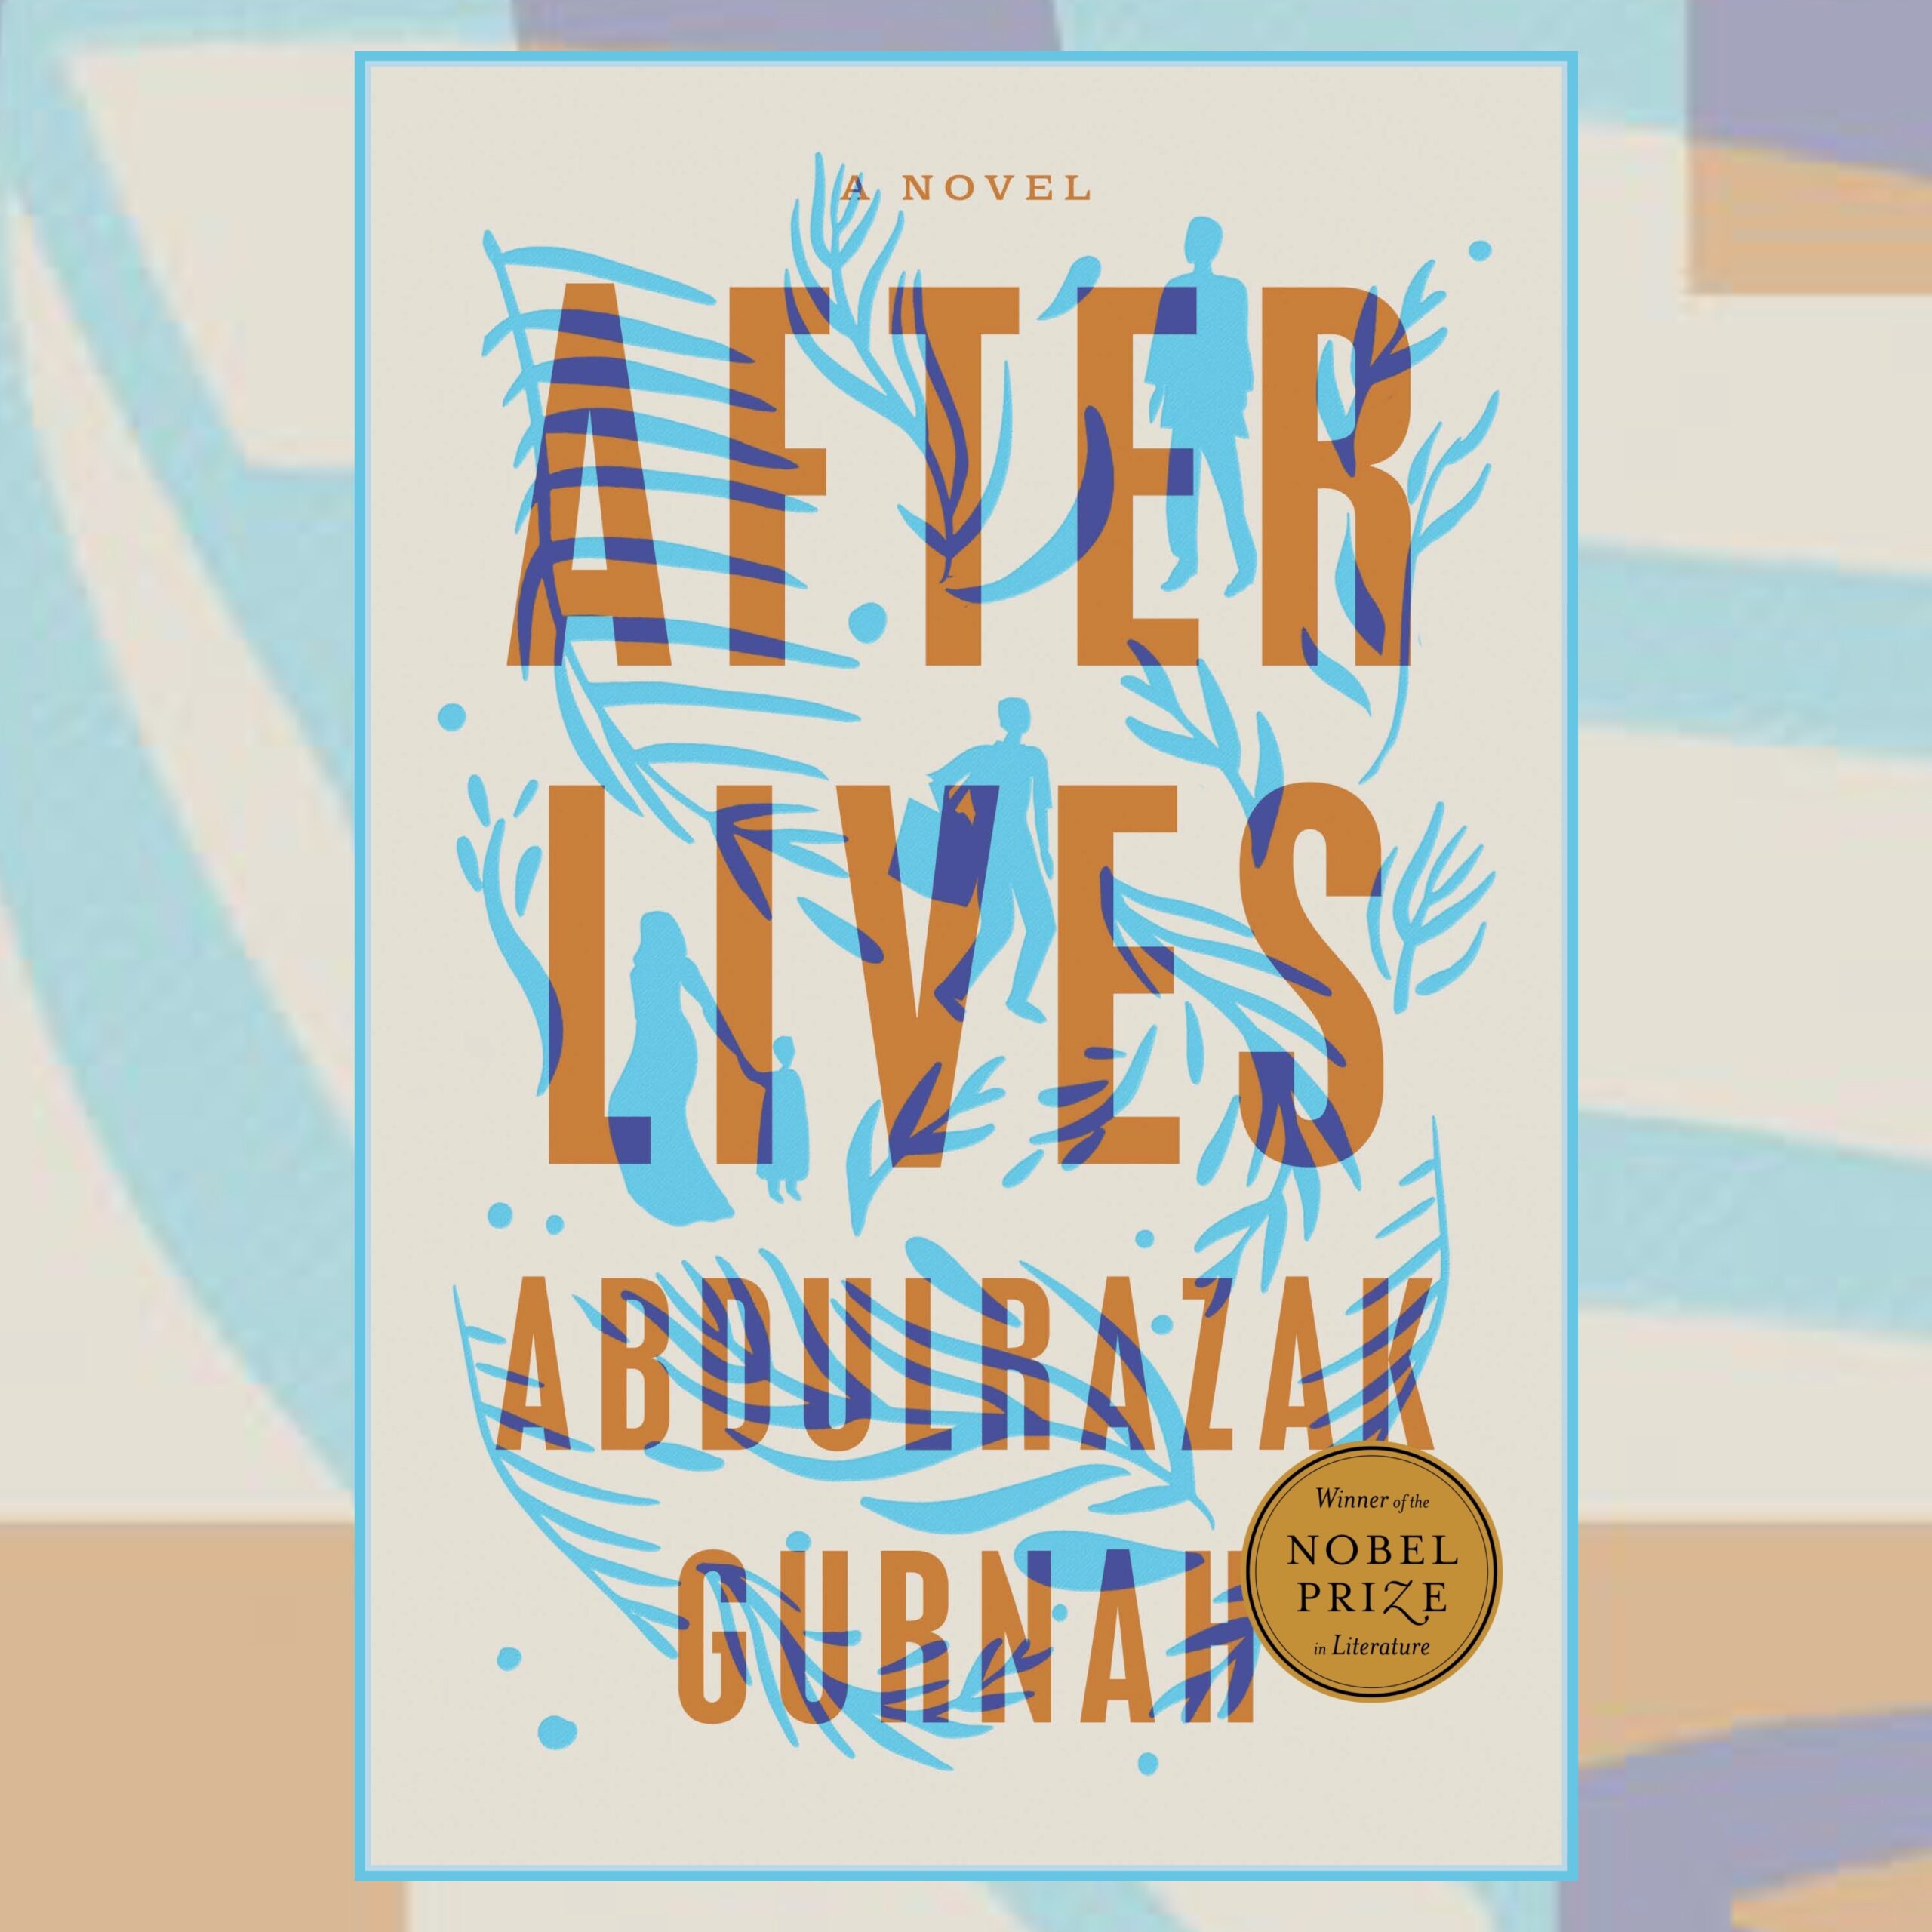 The Book Show #1782 - Abdulrazak Gurnah - Afterlives